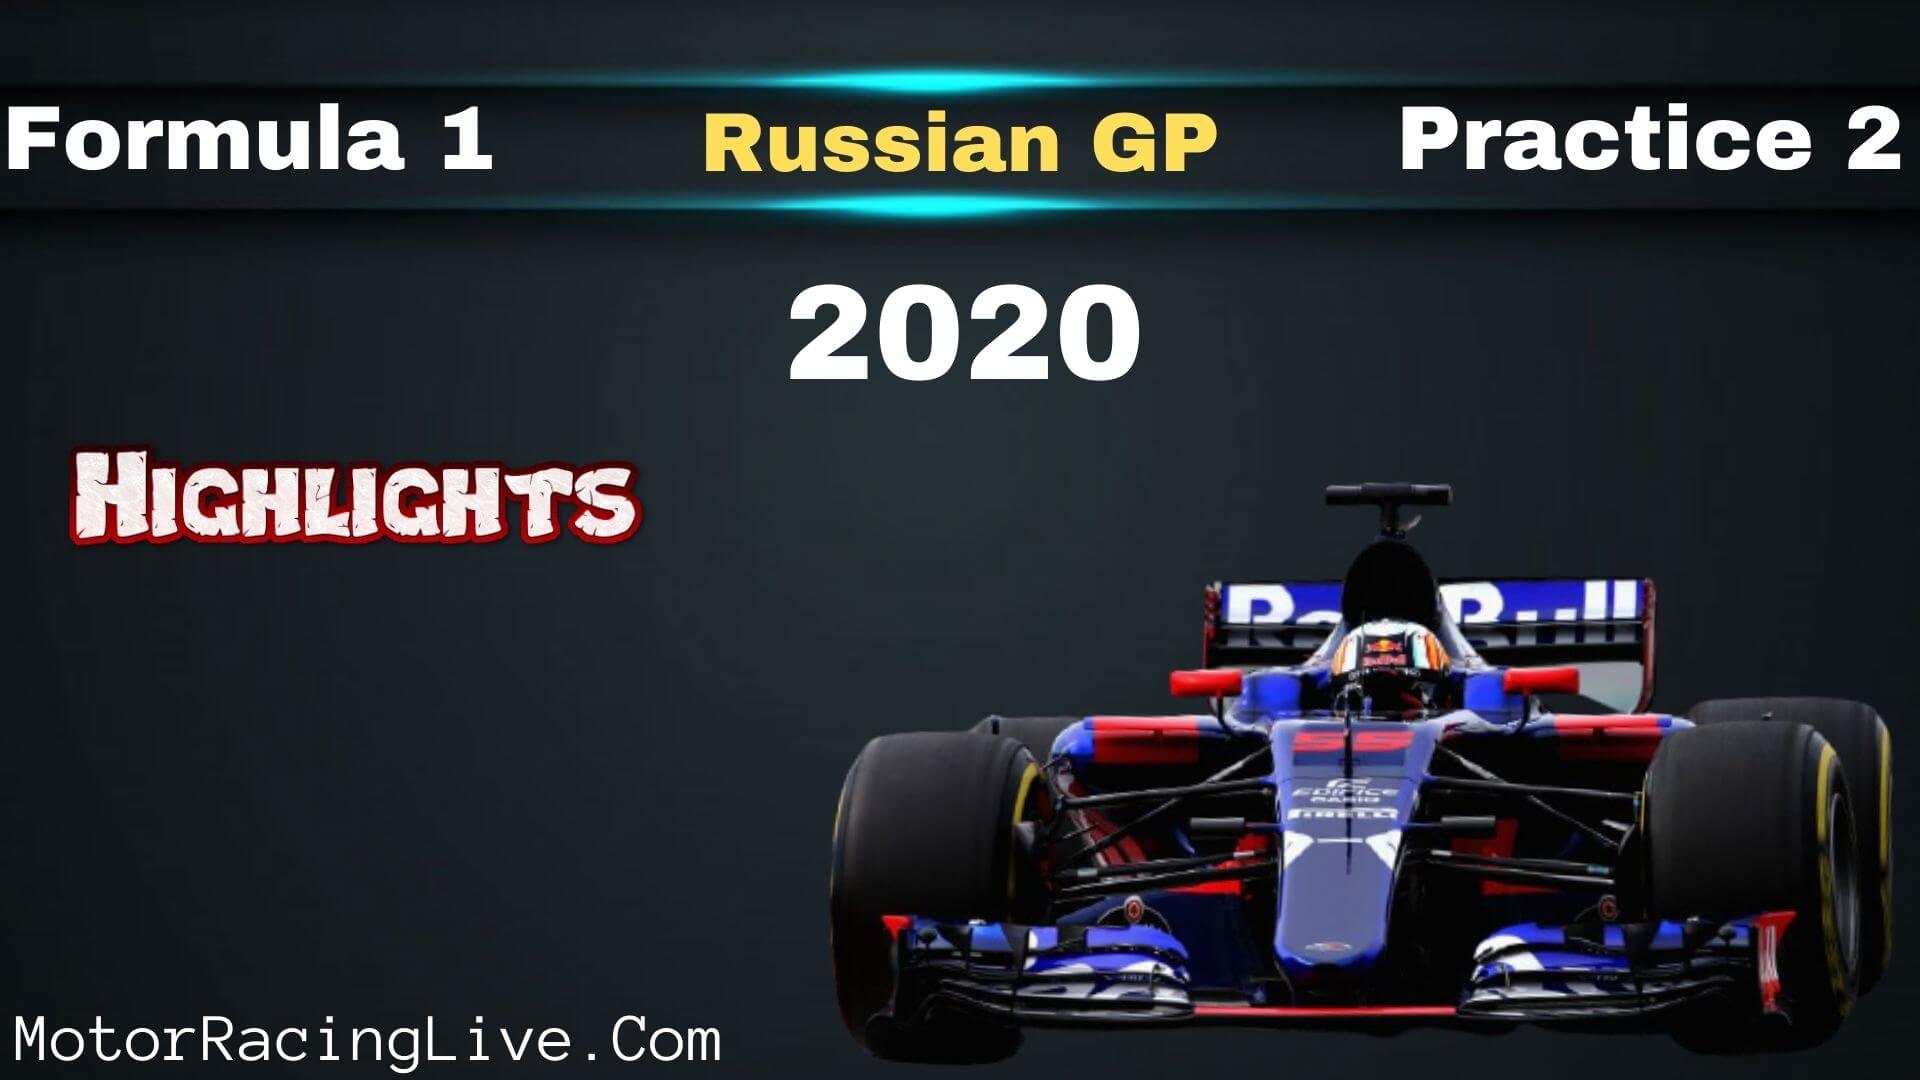 F1 Practice 2 Russian GP Race 2020 Highlights